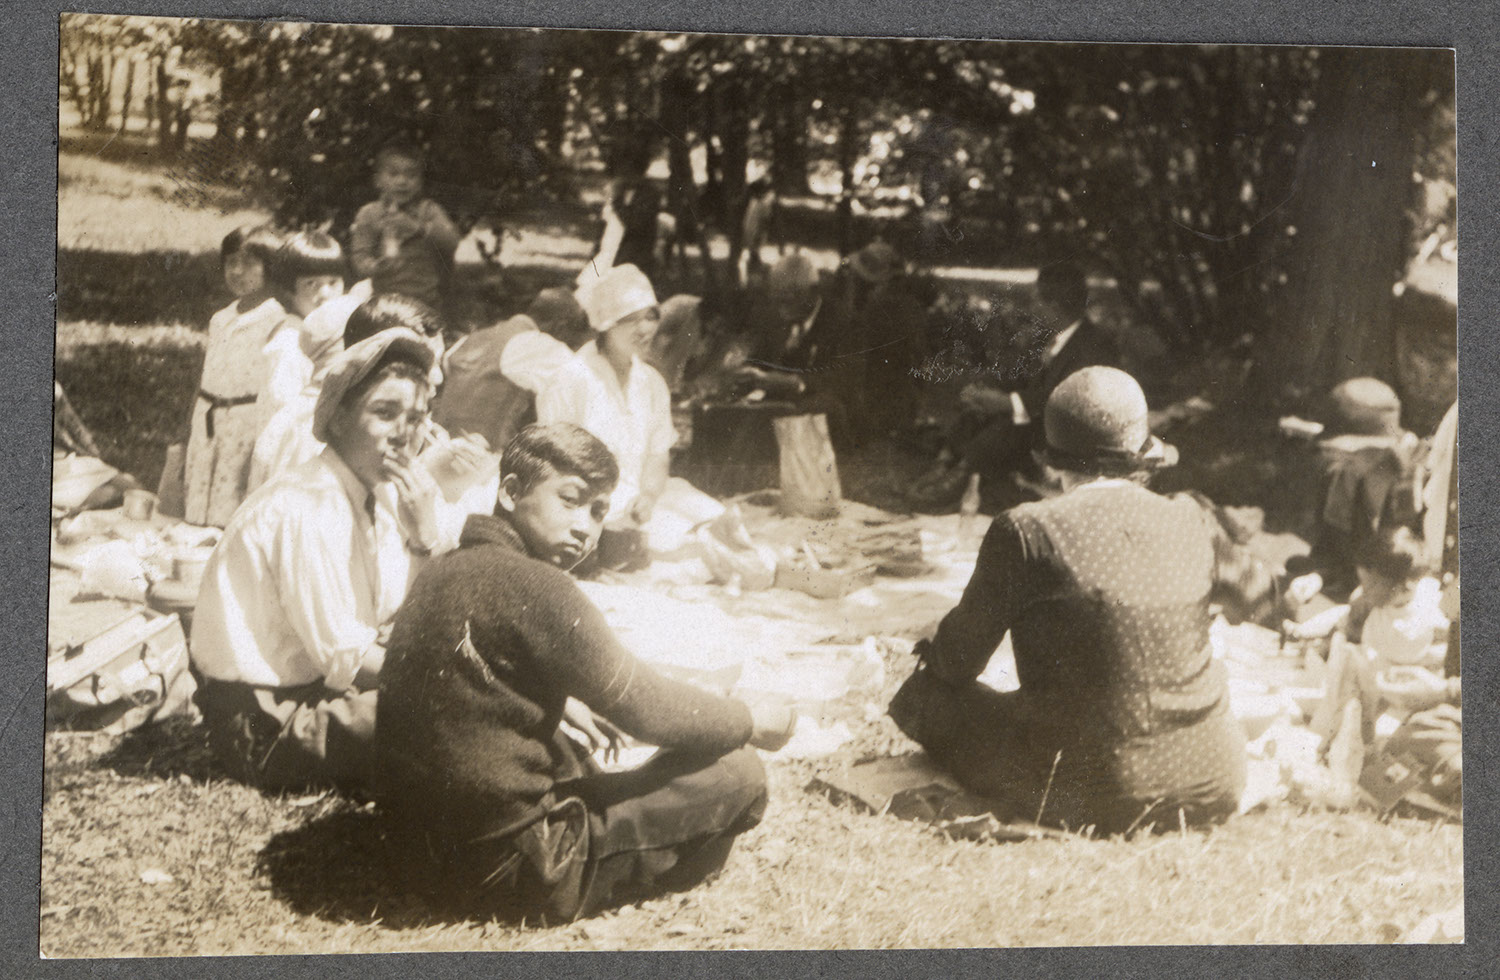 Sunday school picnic at Maple Grove Park